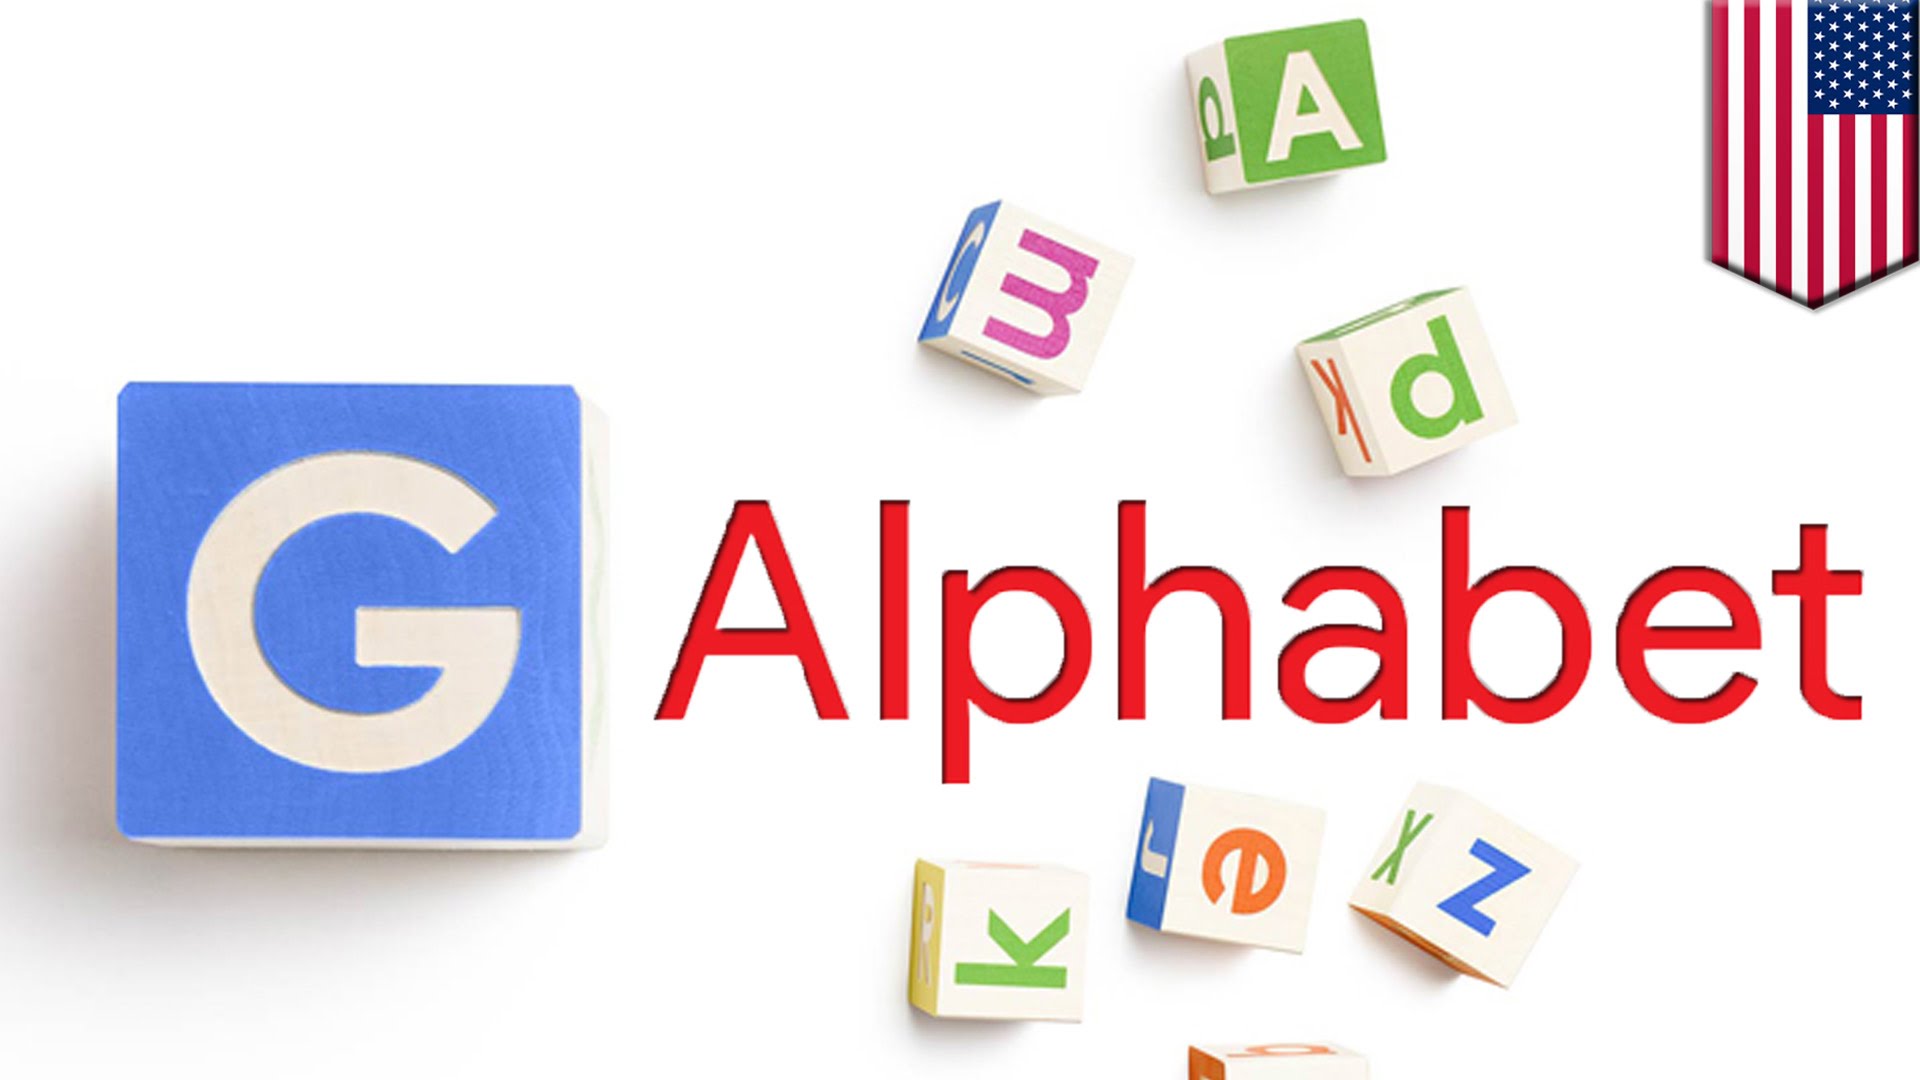 Alphabet (Google) raggiunge nuovi record in Borsa a quota mille dollari